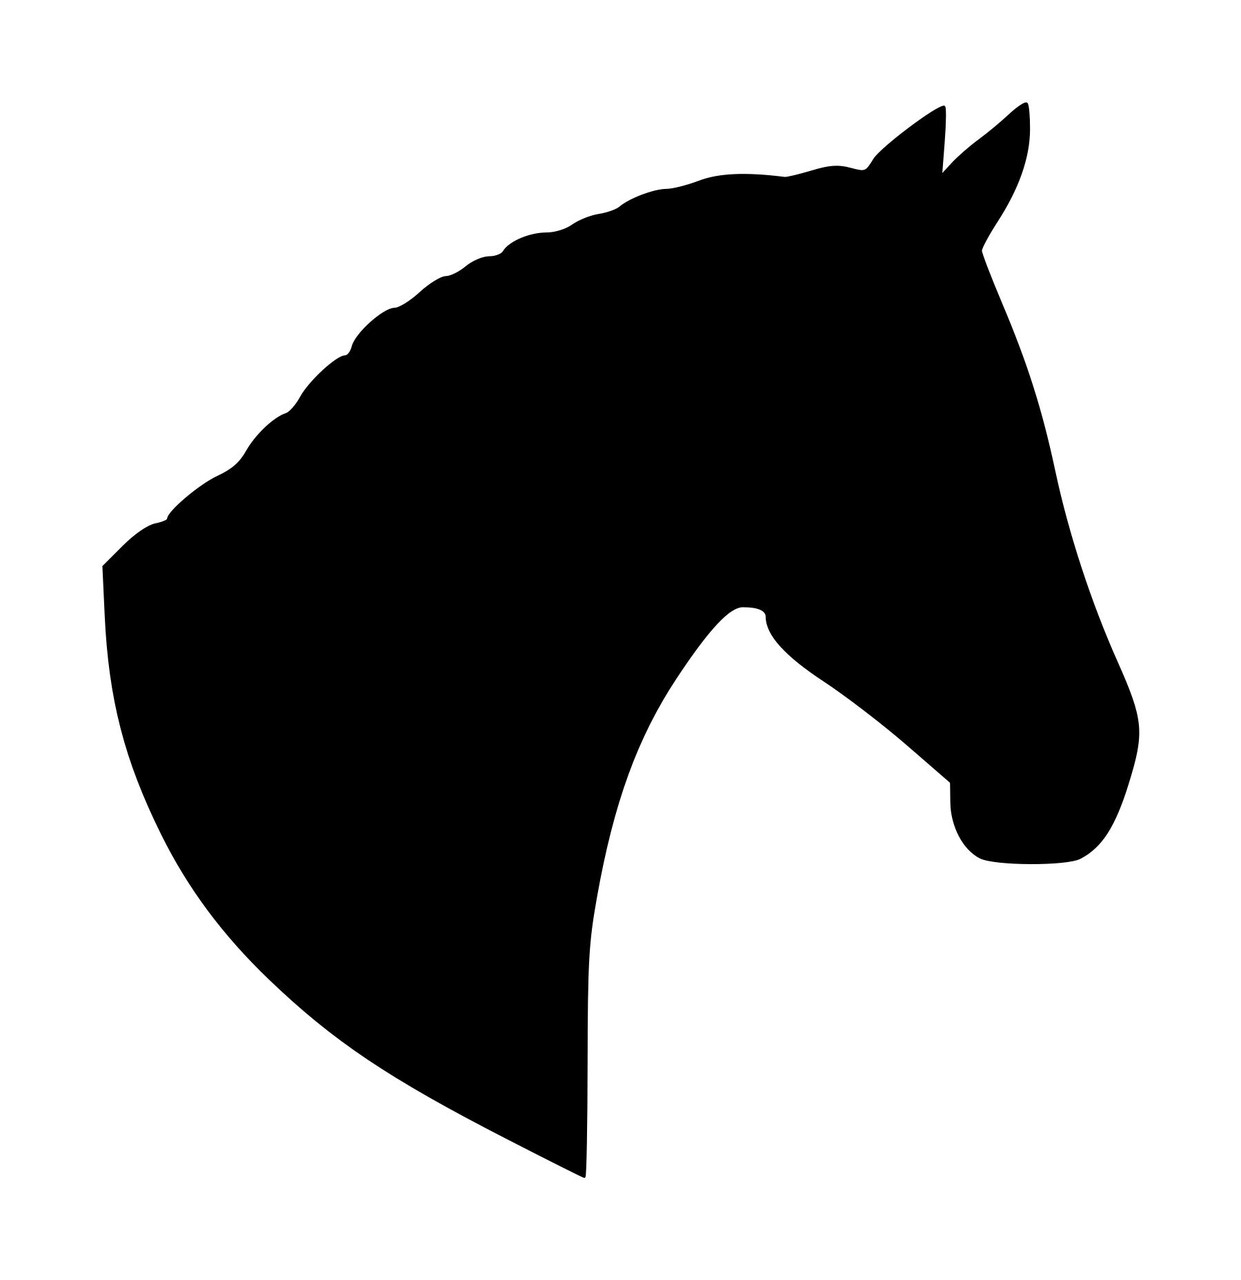 Horse Head -V1- Vinyl Decal Sticker - Equestrian Farm Riding Dressage Equine Profile Silhouette